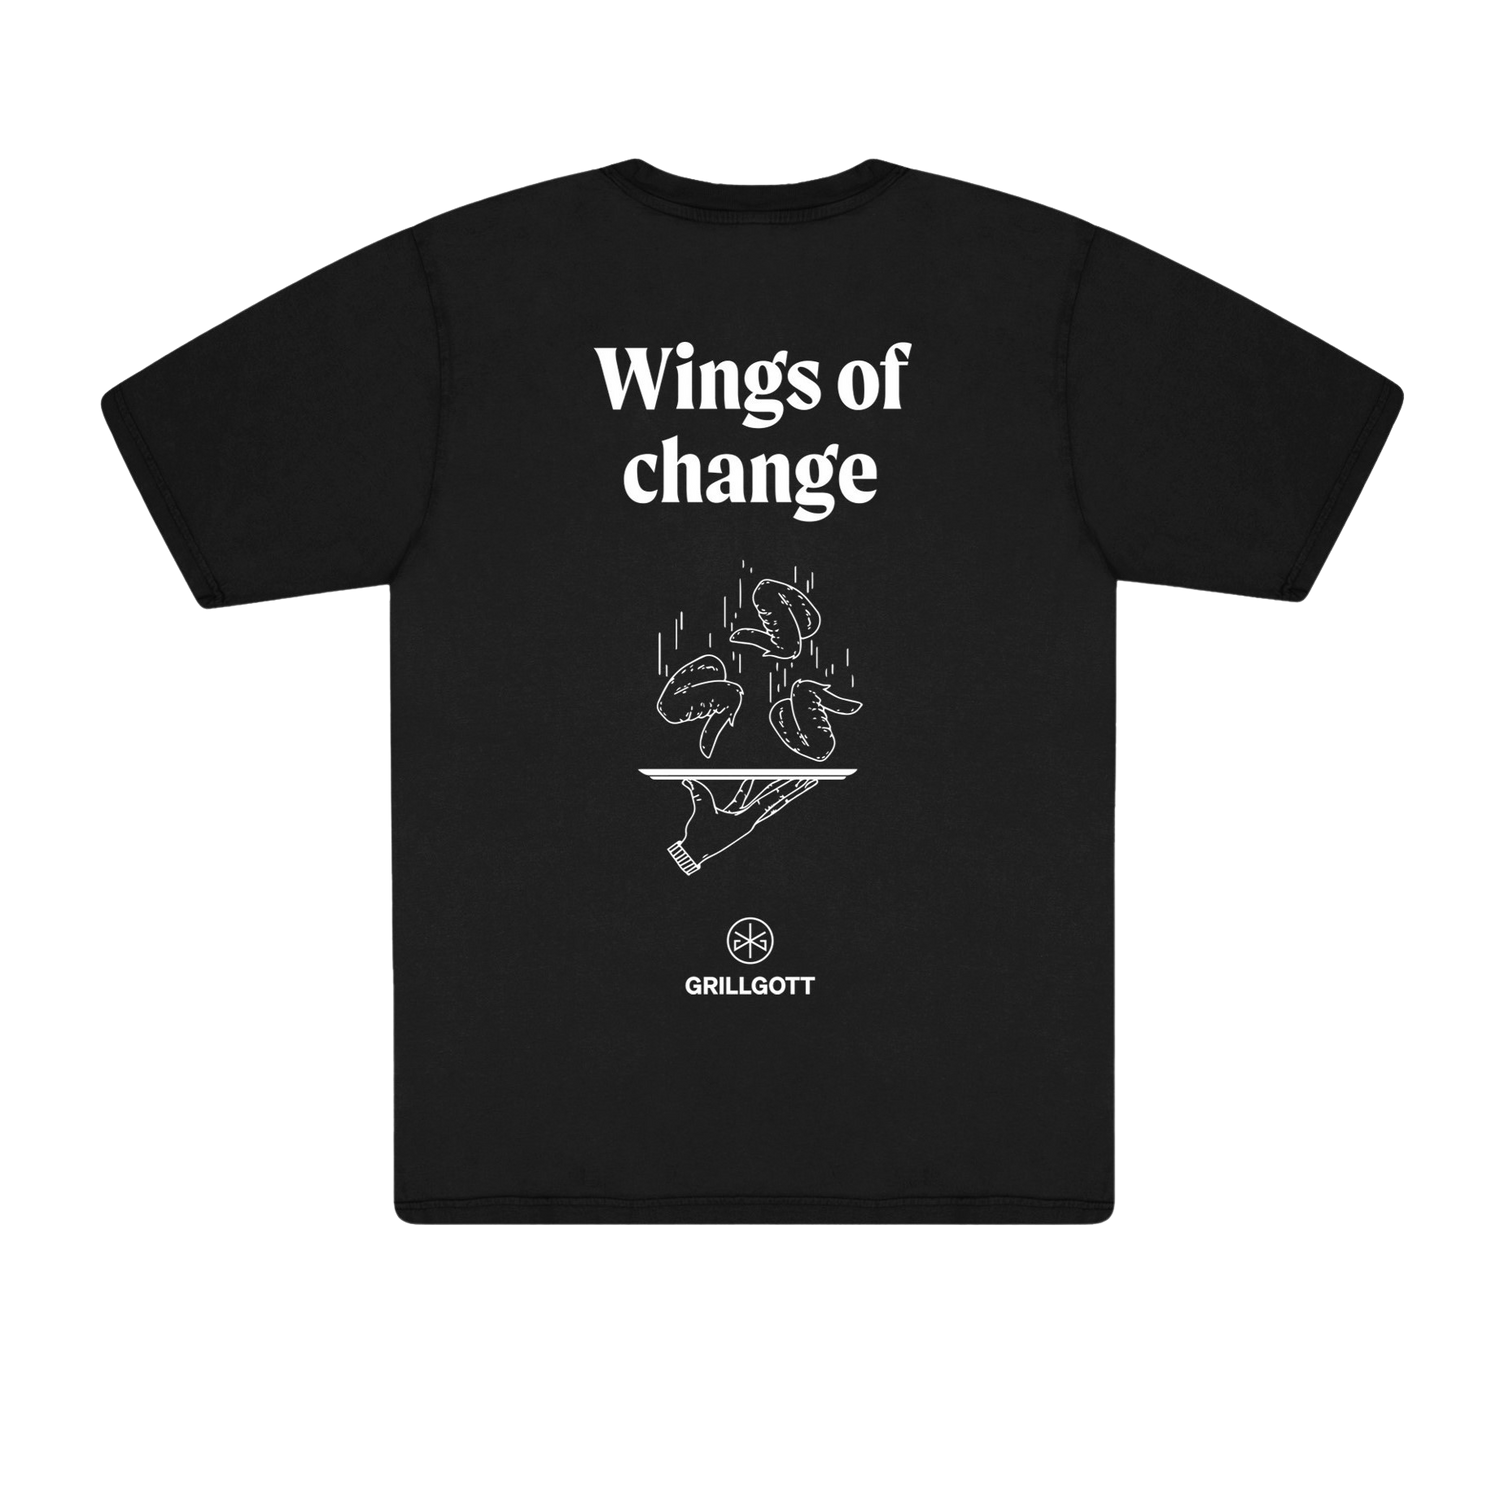 Grillgott T-Shirt S "Wings of change"